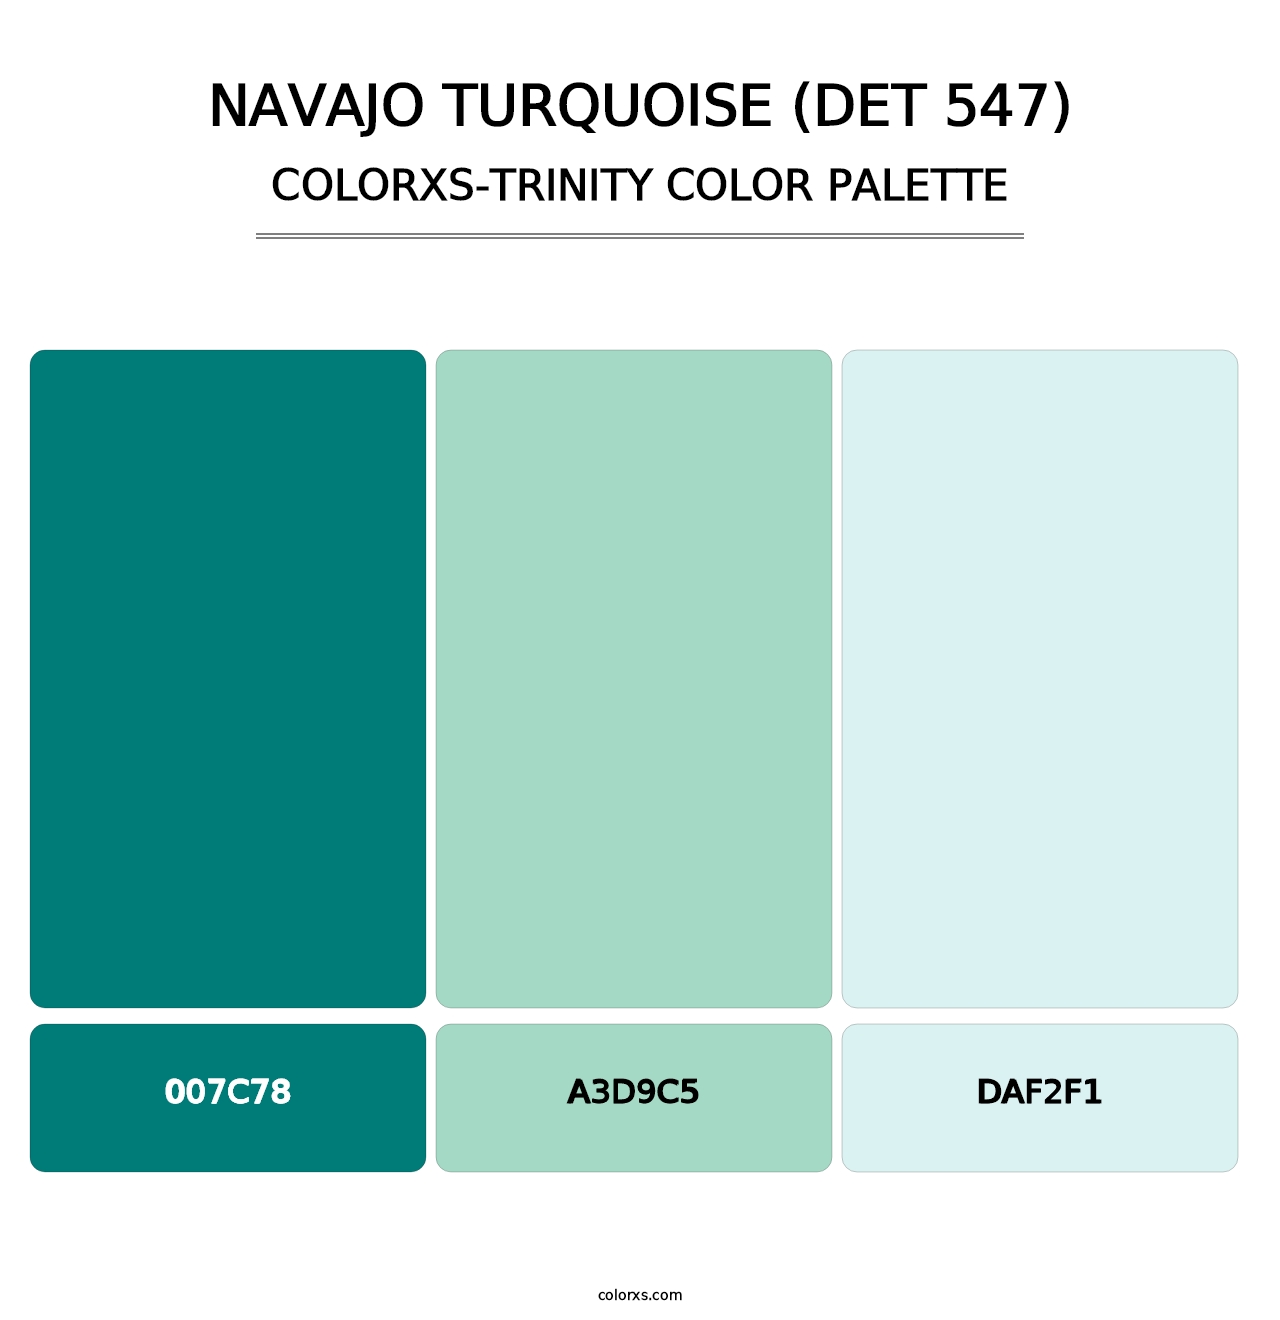 Navajo Turquoise (DET 547) - Colorxs Trinity Palette